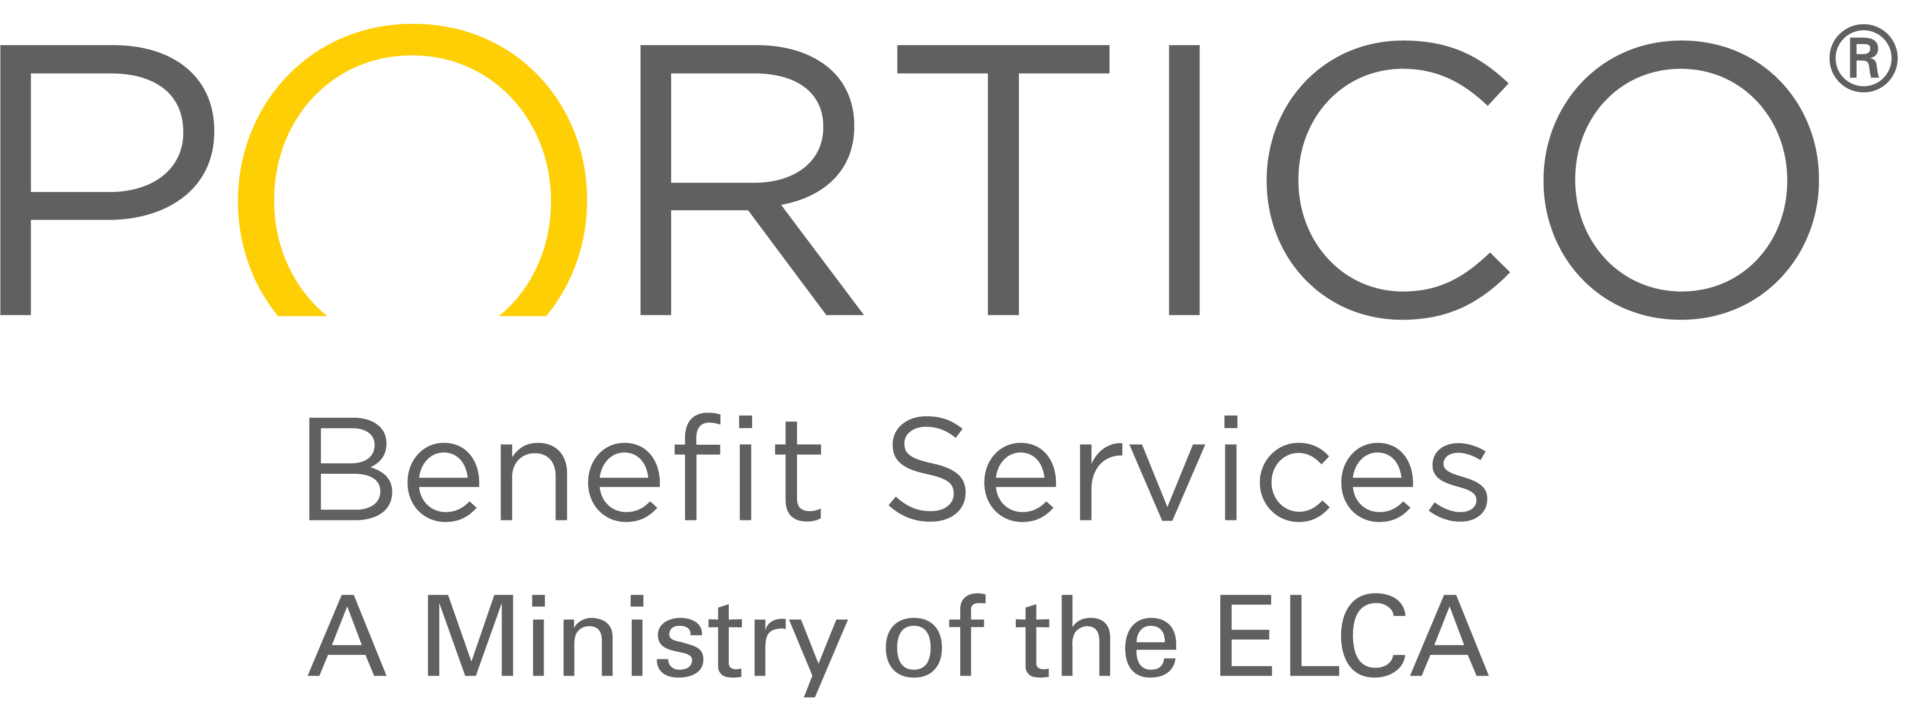 Portico Benefit Services